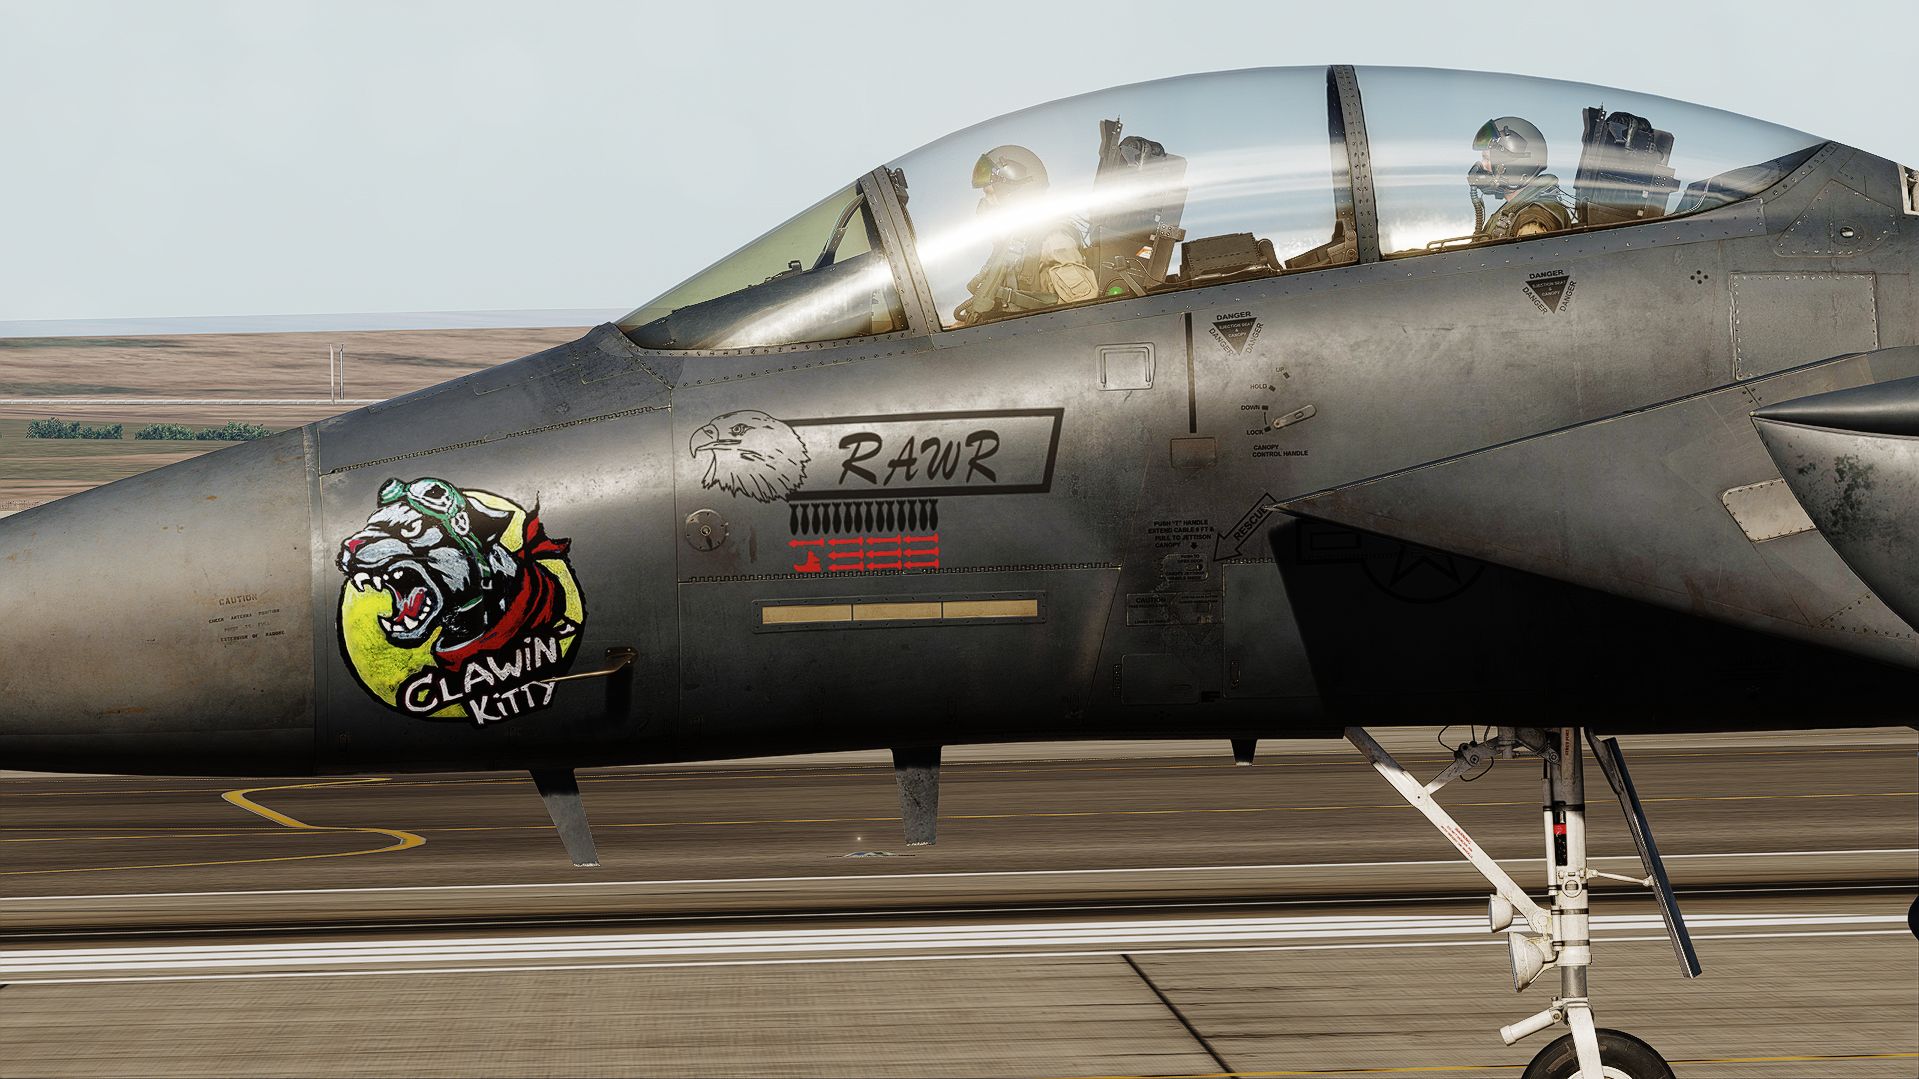 F-15E Strike eagle LN 96-204 "Clawin Kitty"